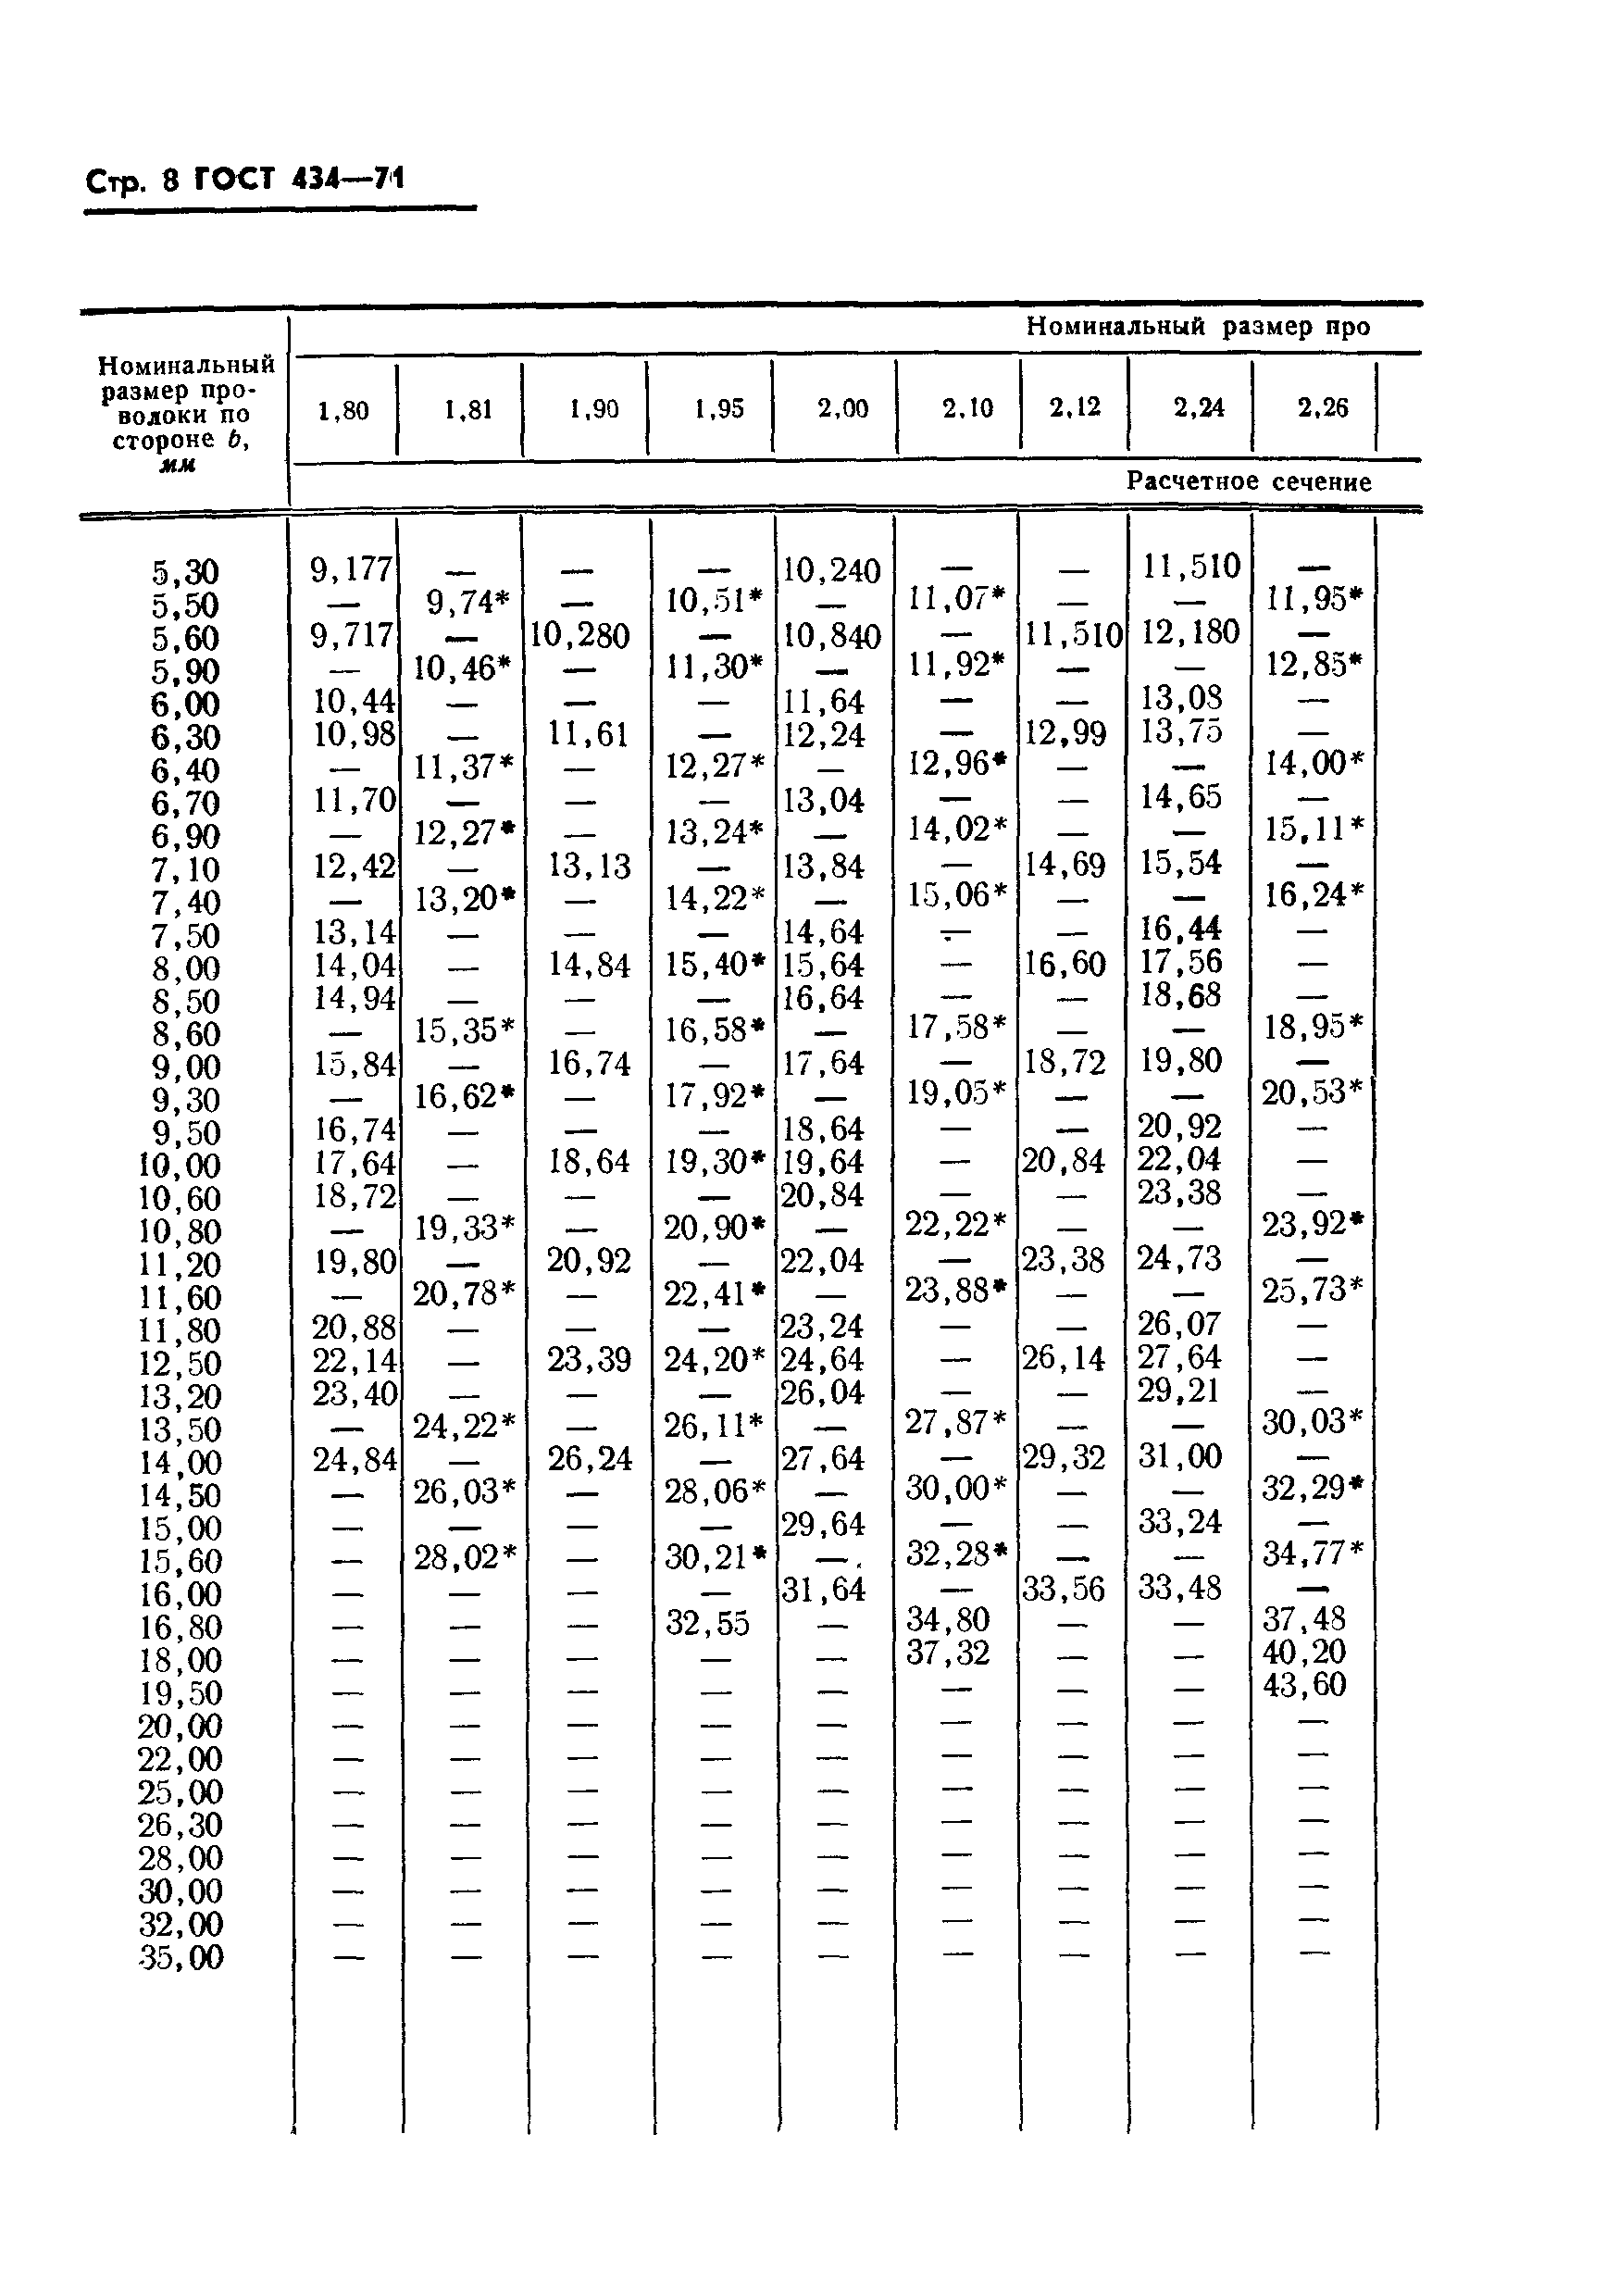 ГОСТ 434-71